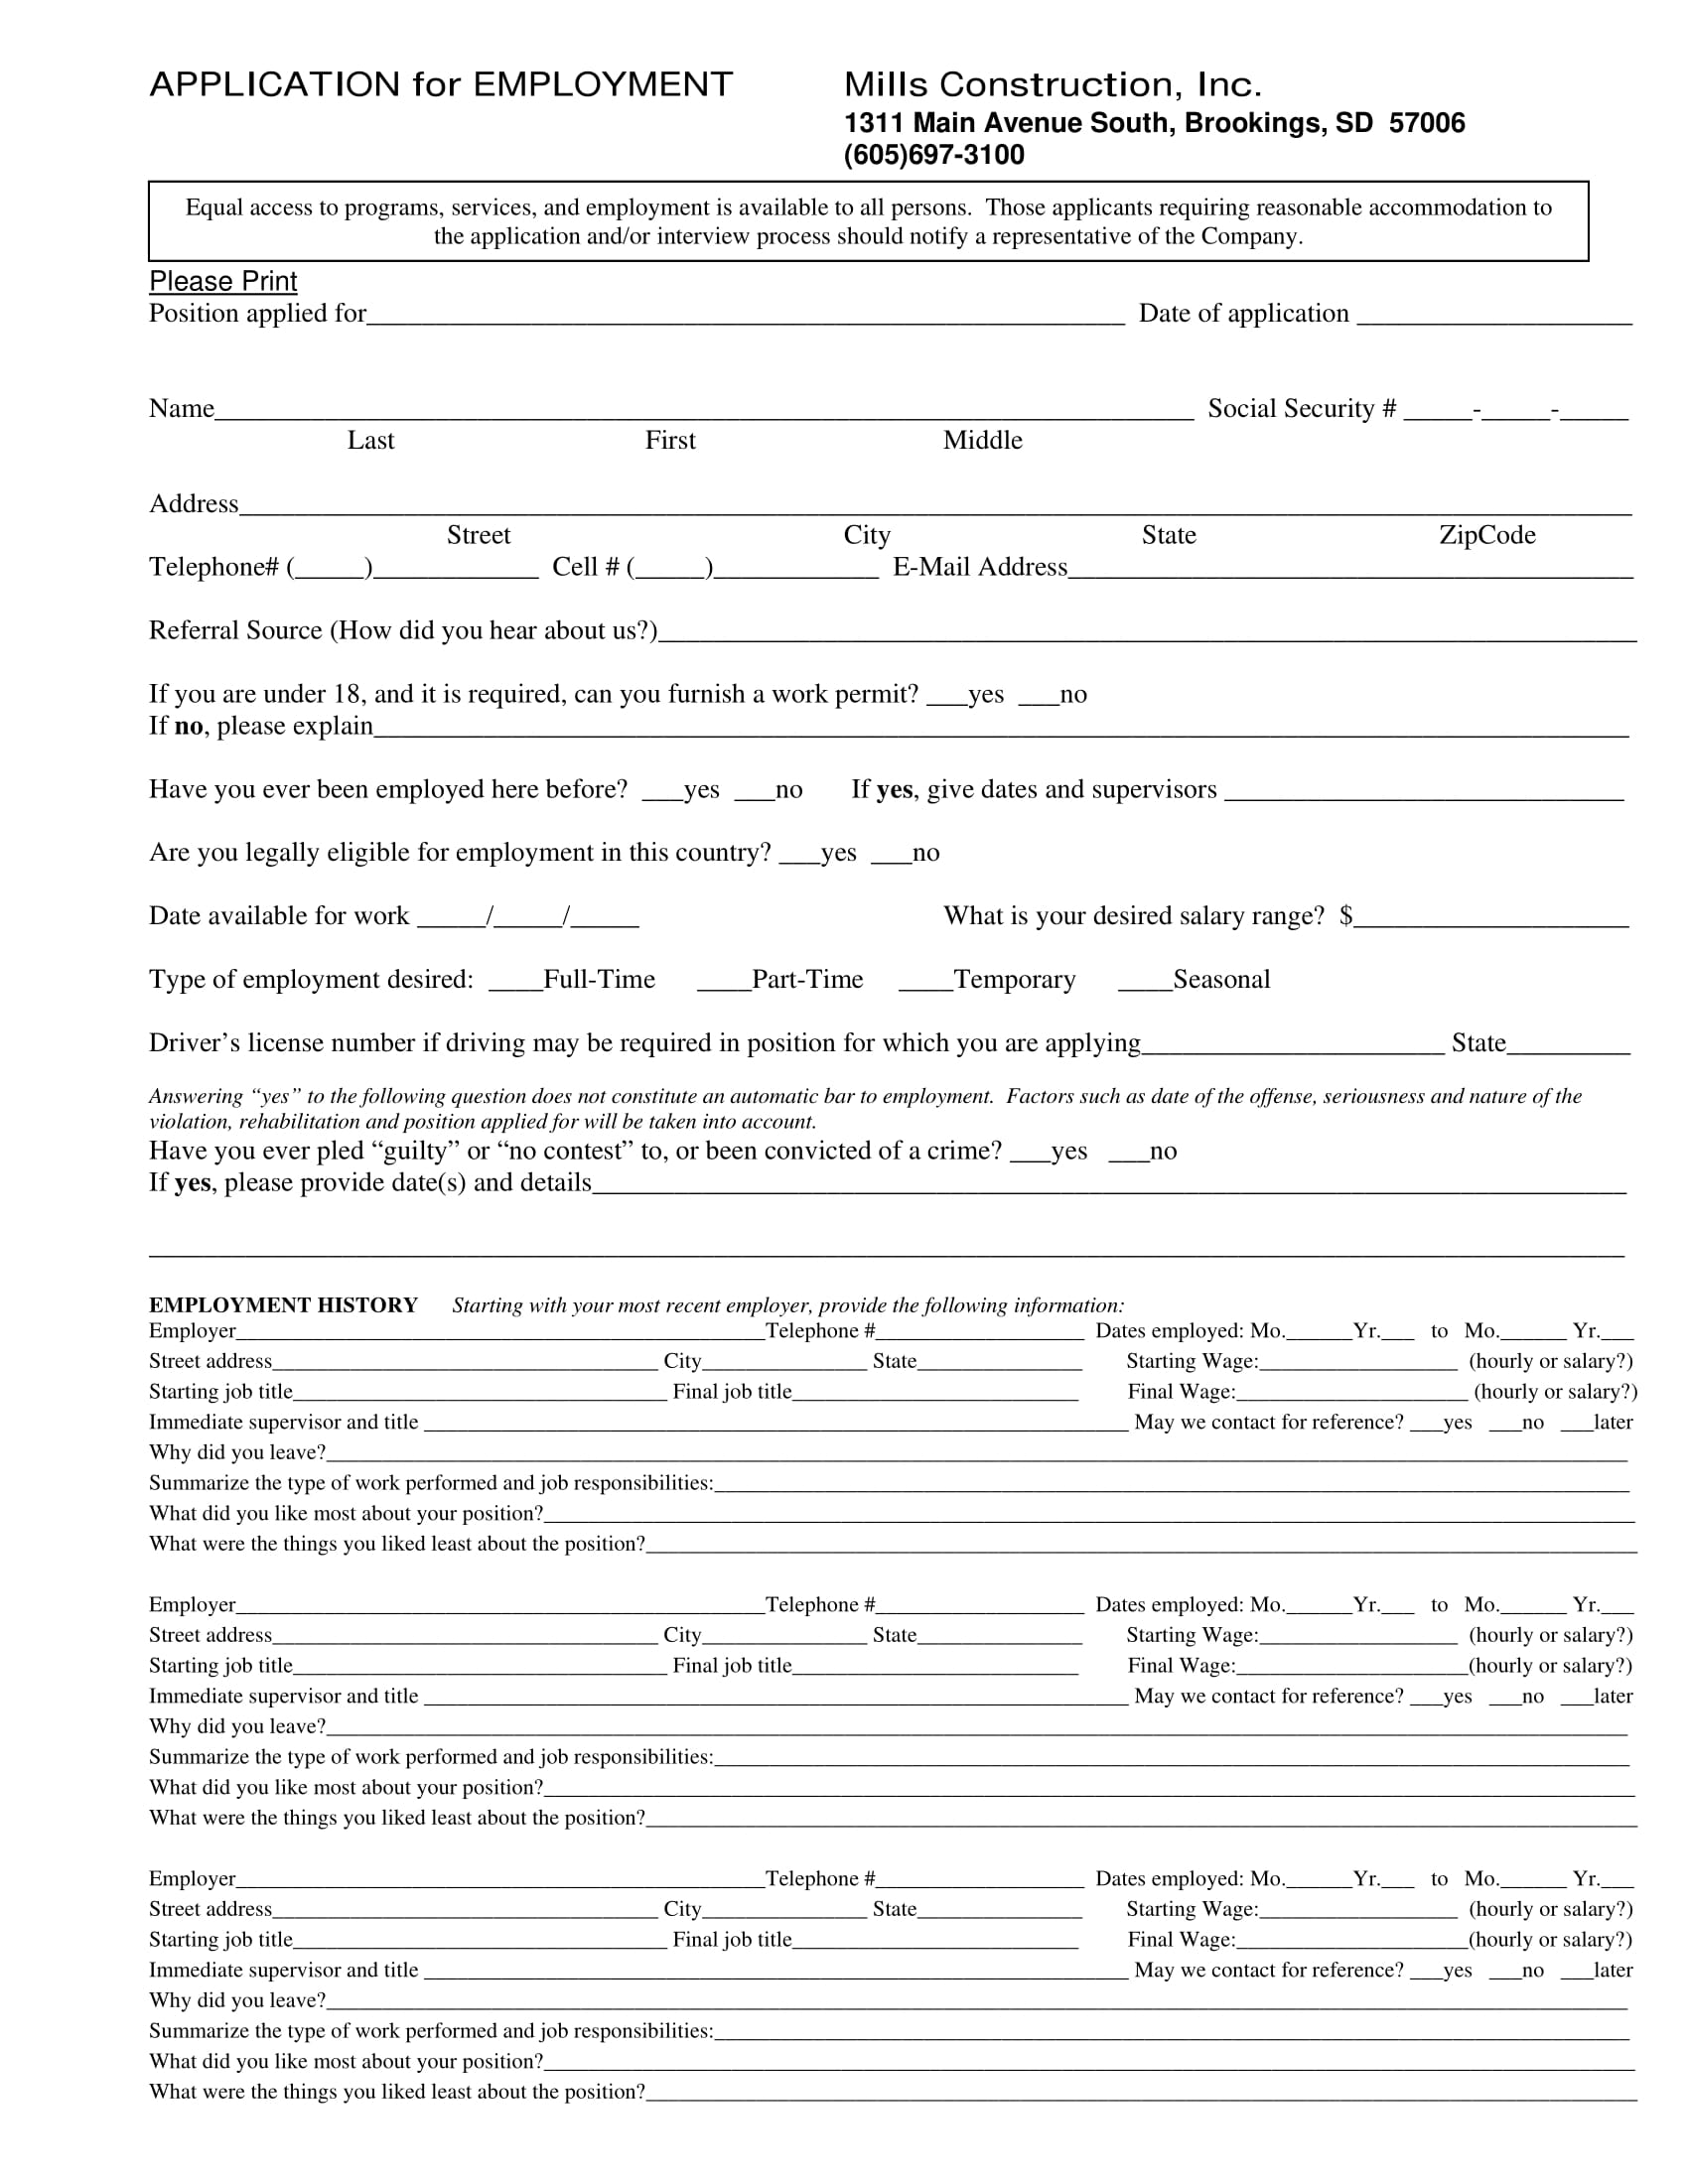 construction employment application form 1